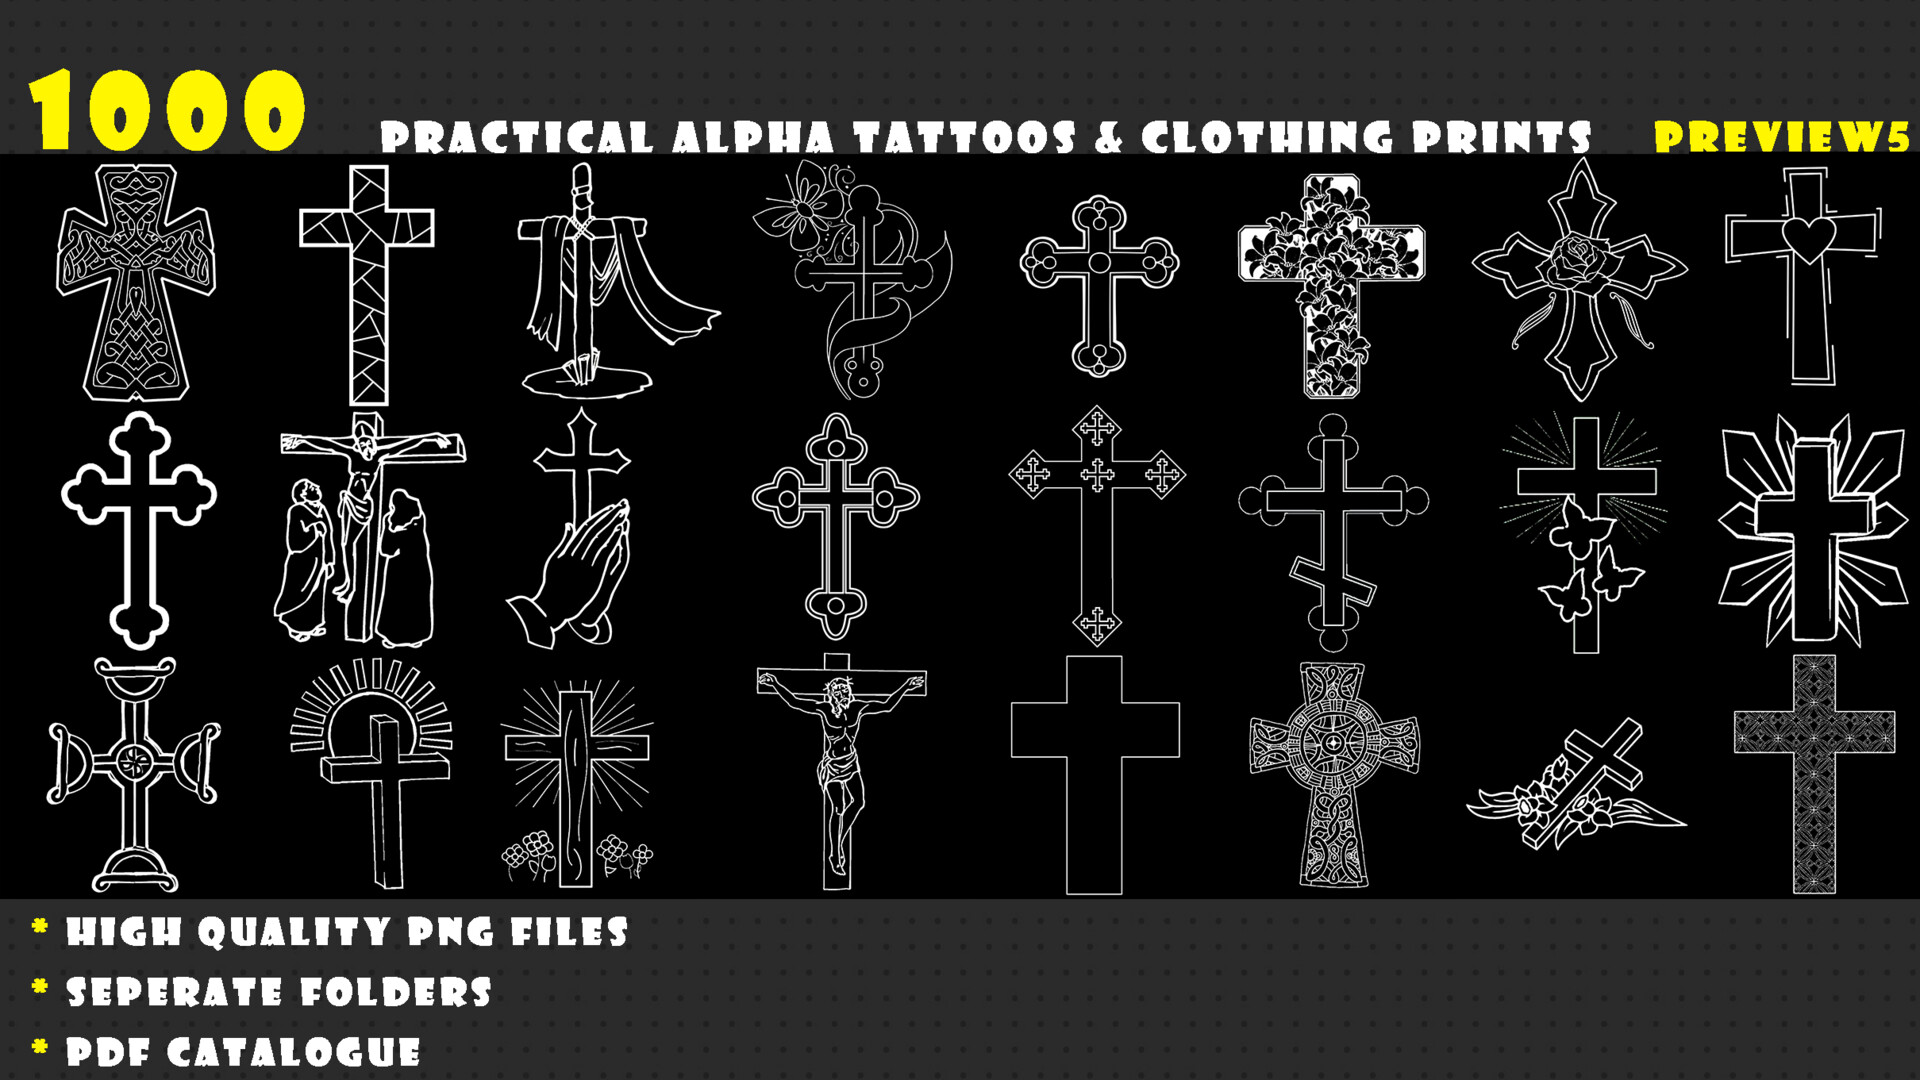 ArtStation - 1000 Practical Alpha Tattoos & Clothing prints